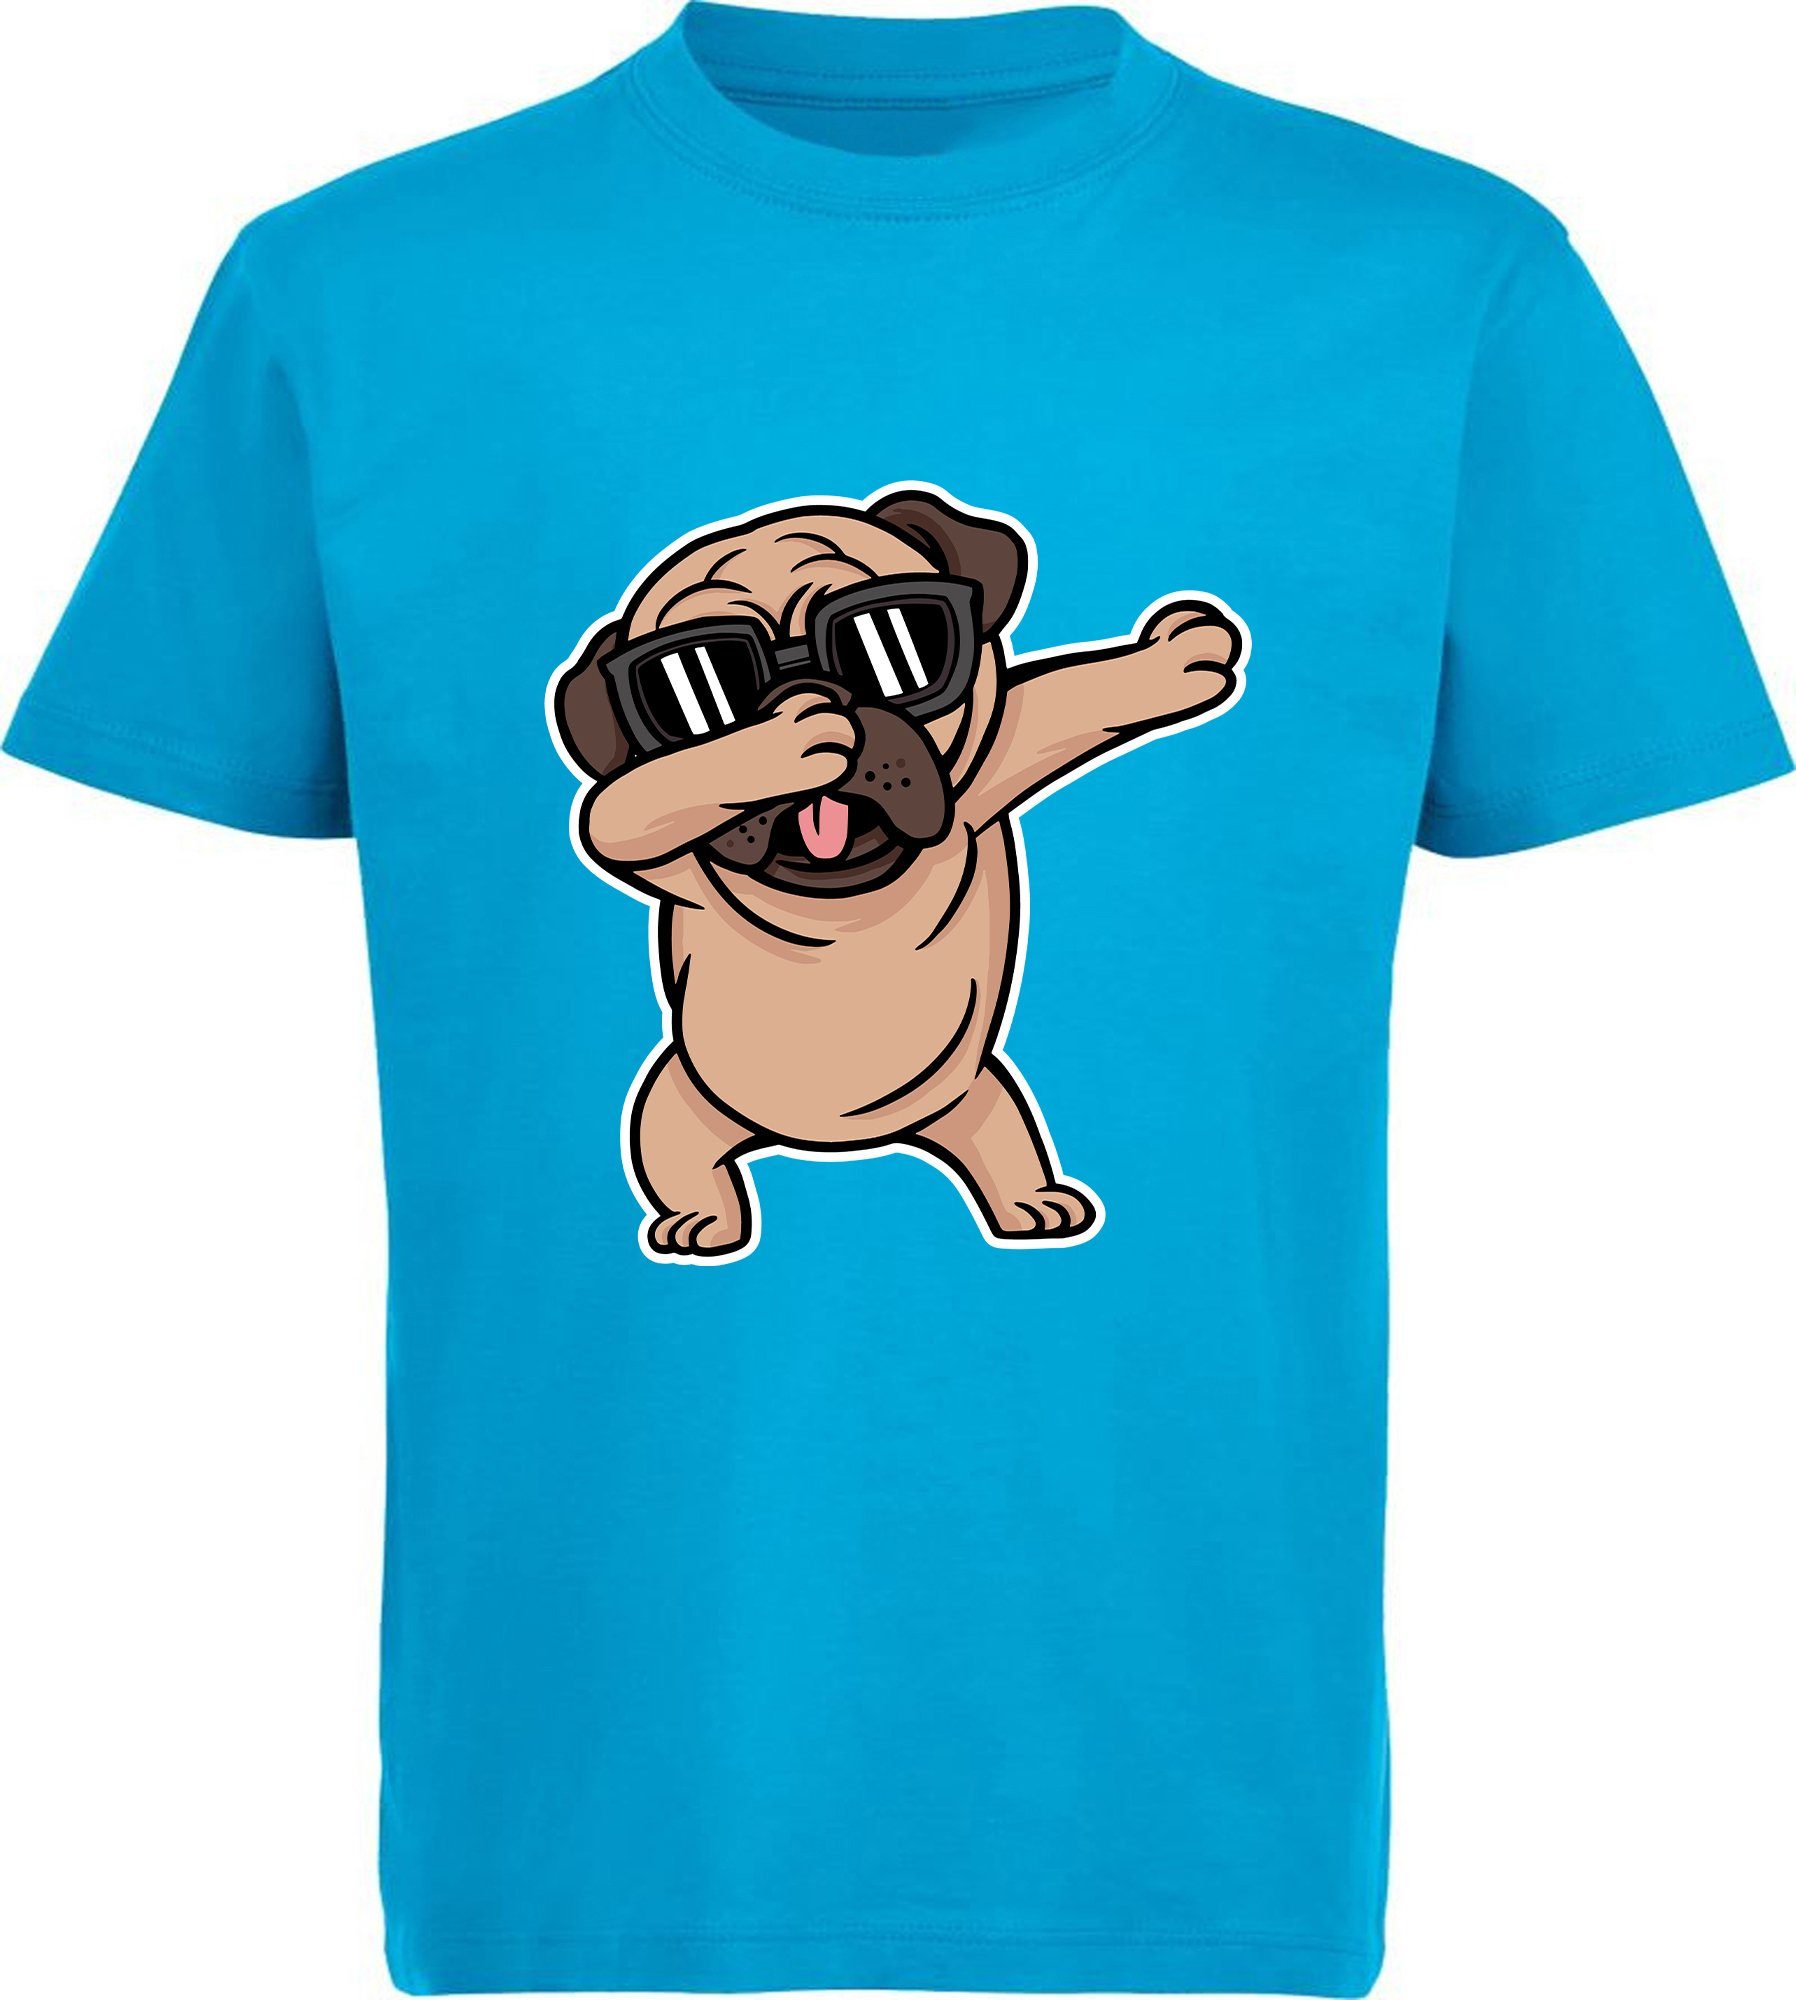 Kinder Hund T-Shirt MyDesign24 i239 Baumwollshirt Aufdruck, bedruckt Skateboard blau aqua - Hunde Cooler mit mit Print-Shirt